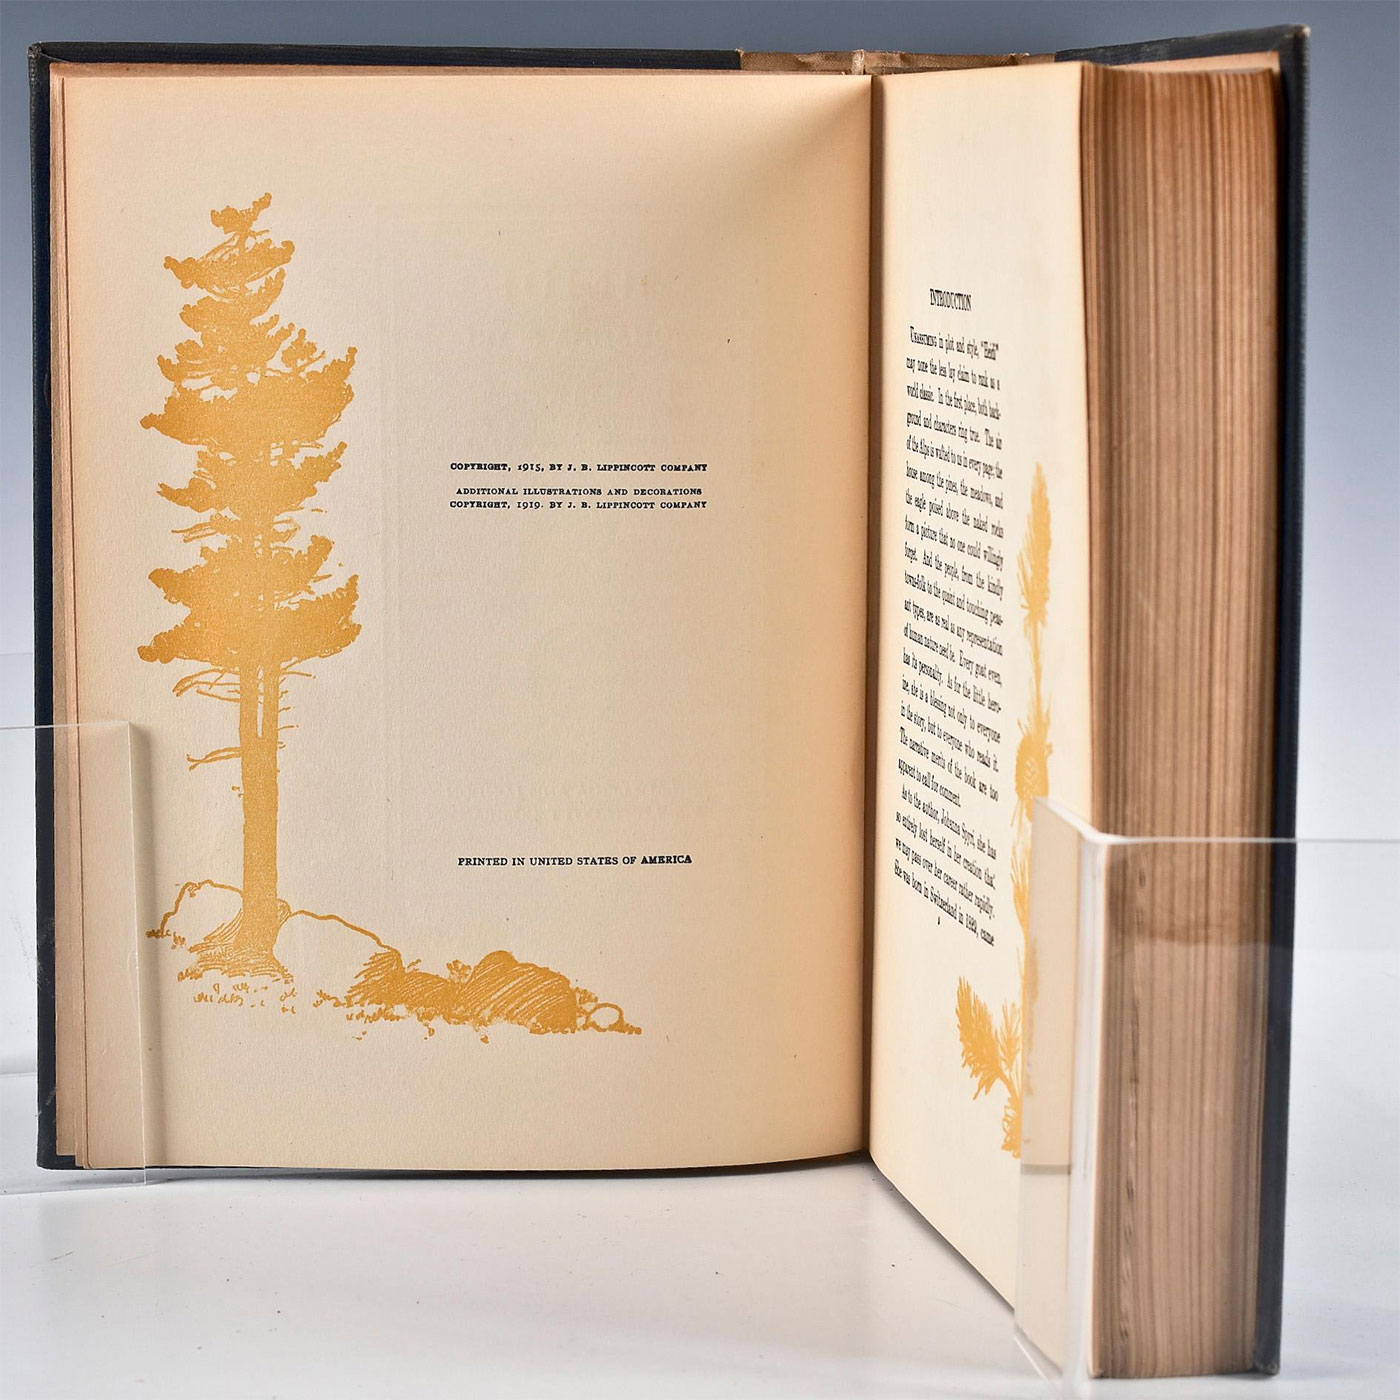 HEIDI BOOK BY JOHANNA SPYRI ILLUSTRATED BY MARIA L. KIRK - Image 4 of 4